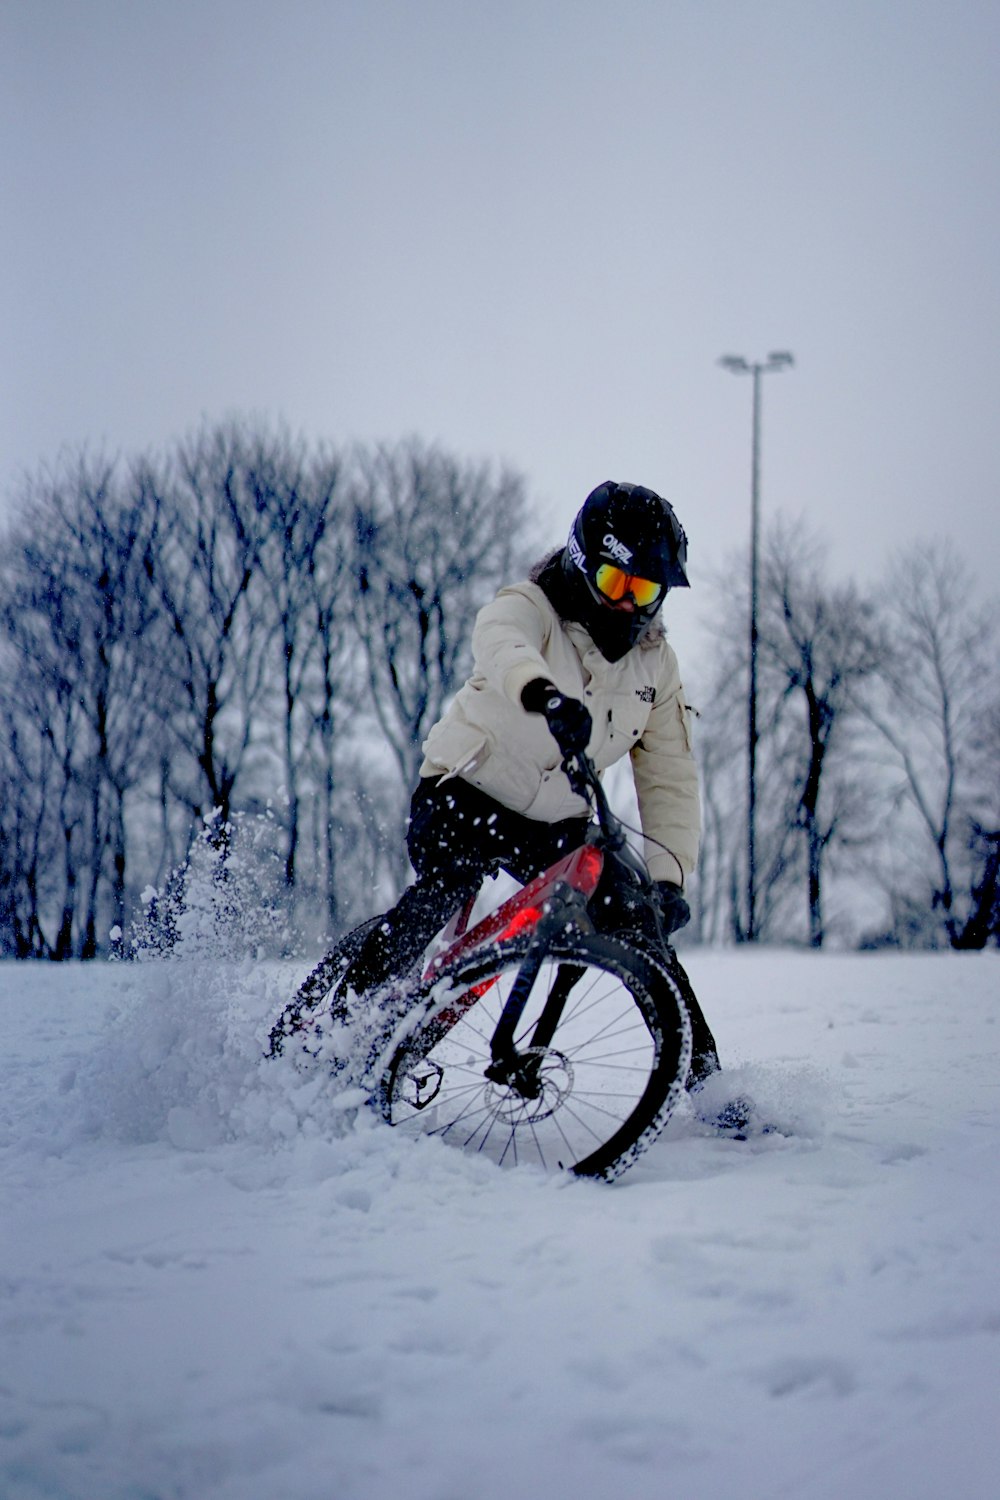 Man in white jacket riding on black bmx bike on snow covered ground during  daytime photo – Free Sports Image on Unsplash